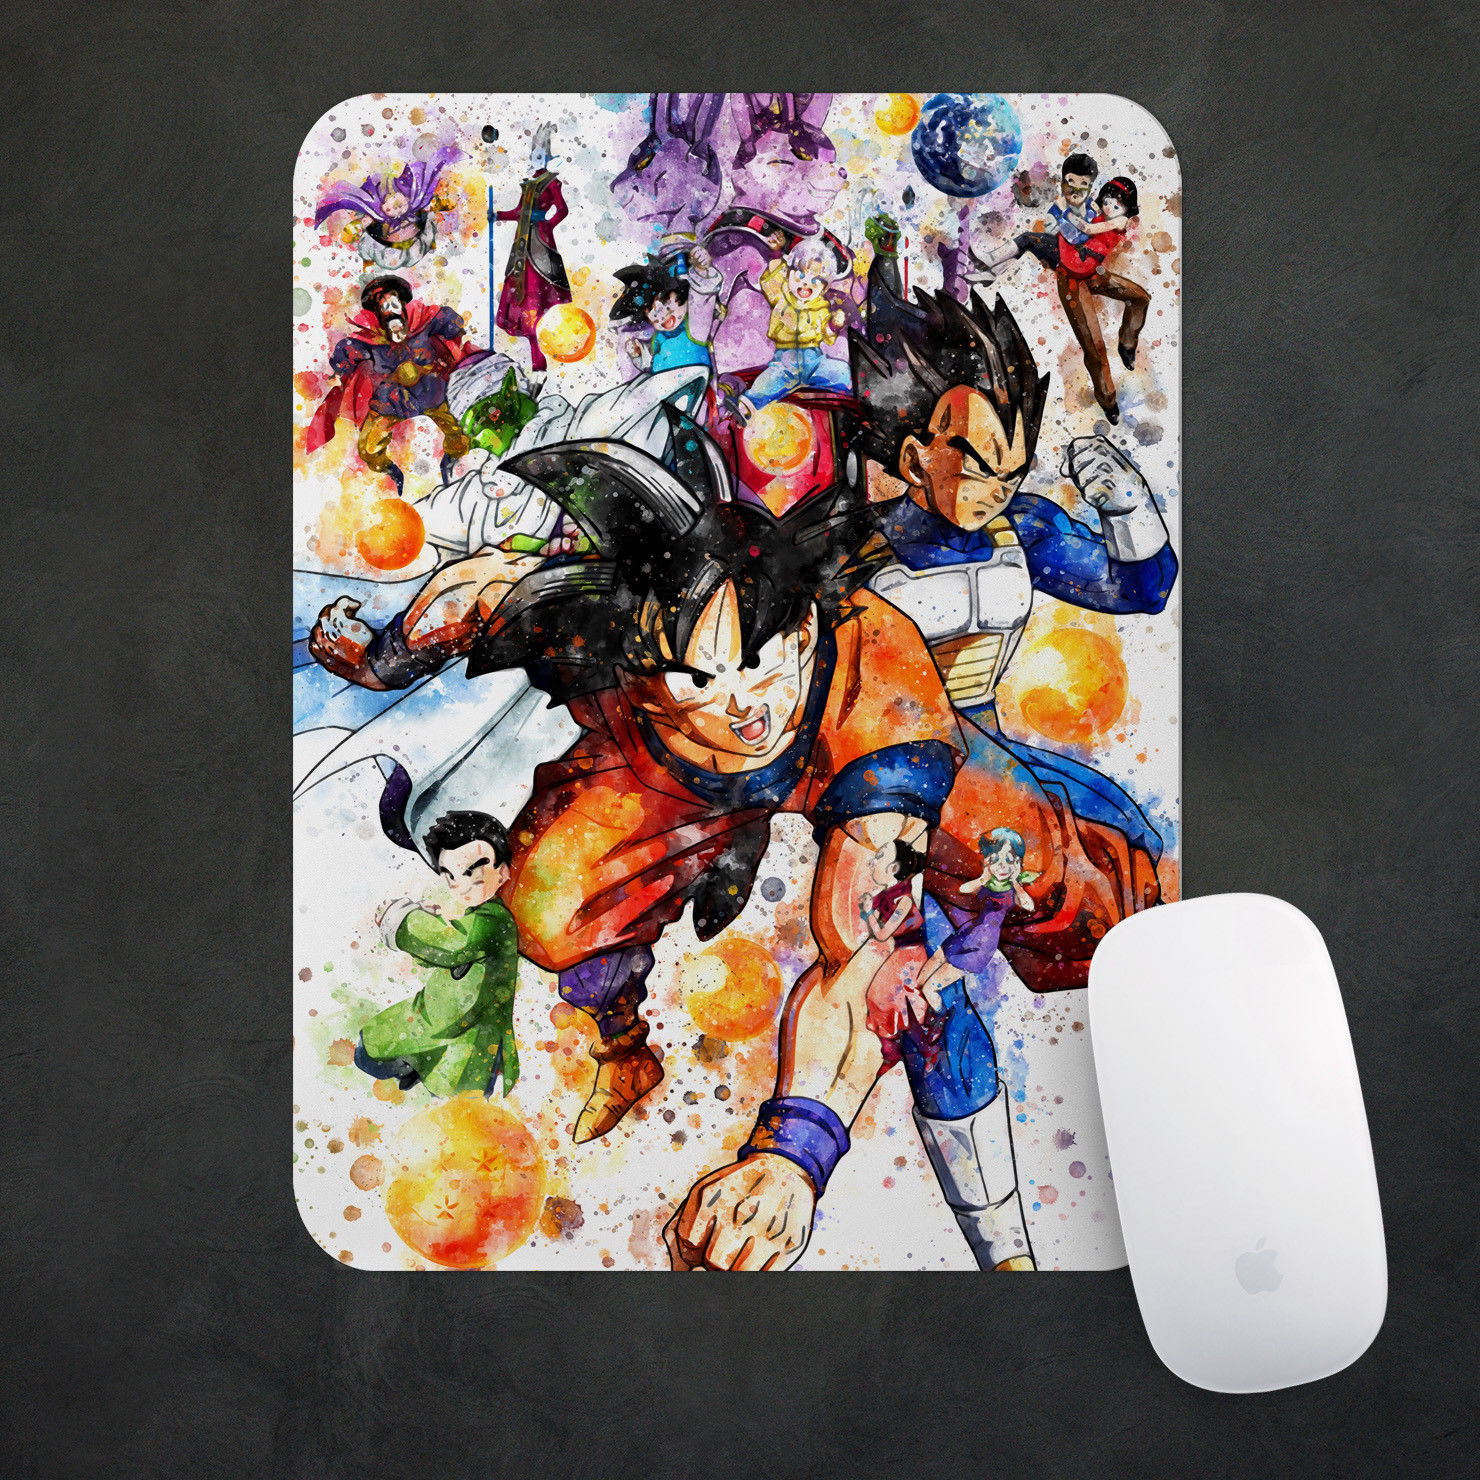 Dragon Ball Z Super Anime Mousepad Large Gaming Mouse Pad 38x48cm Goku Mat n184 Mouse Pads, Mats